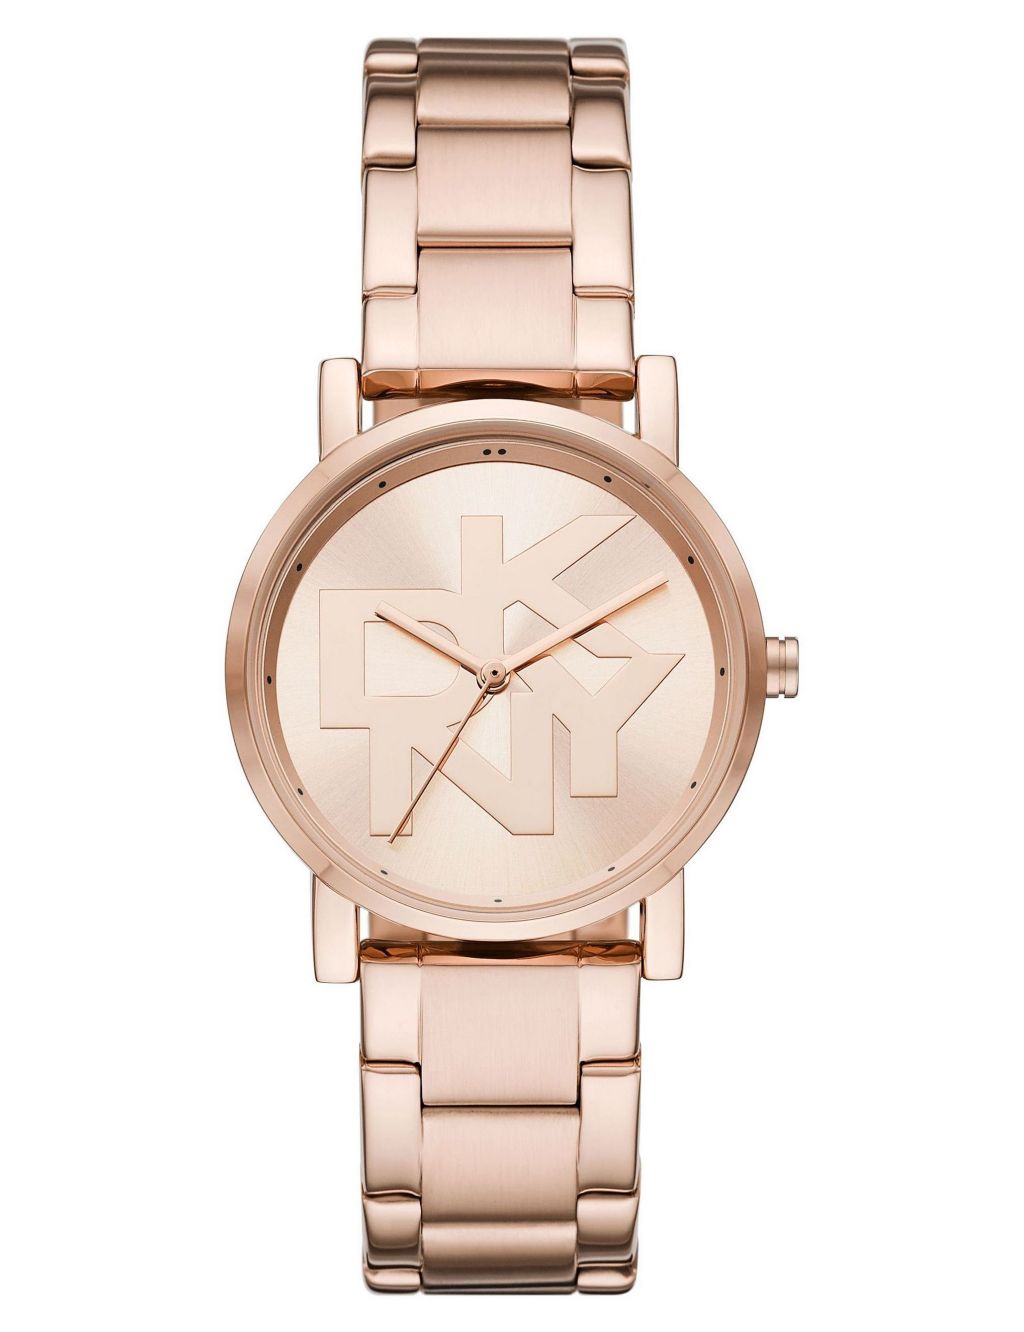 DKNY Soho Rose Gold Metal Watch image 1